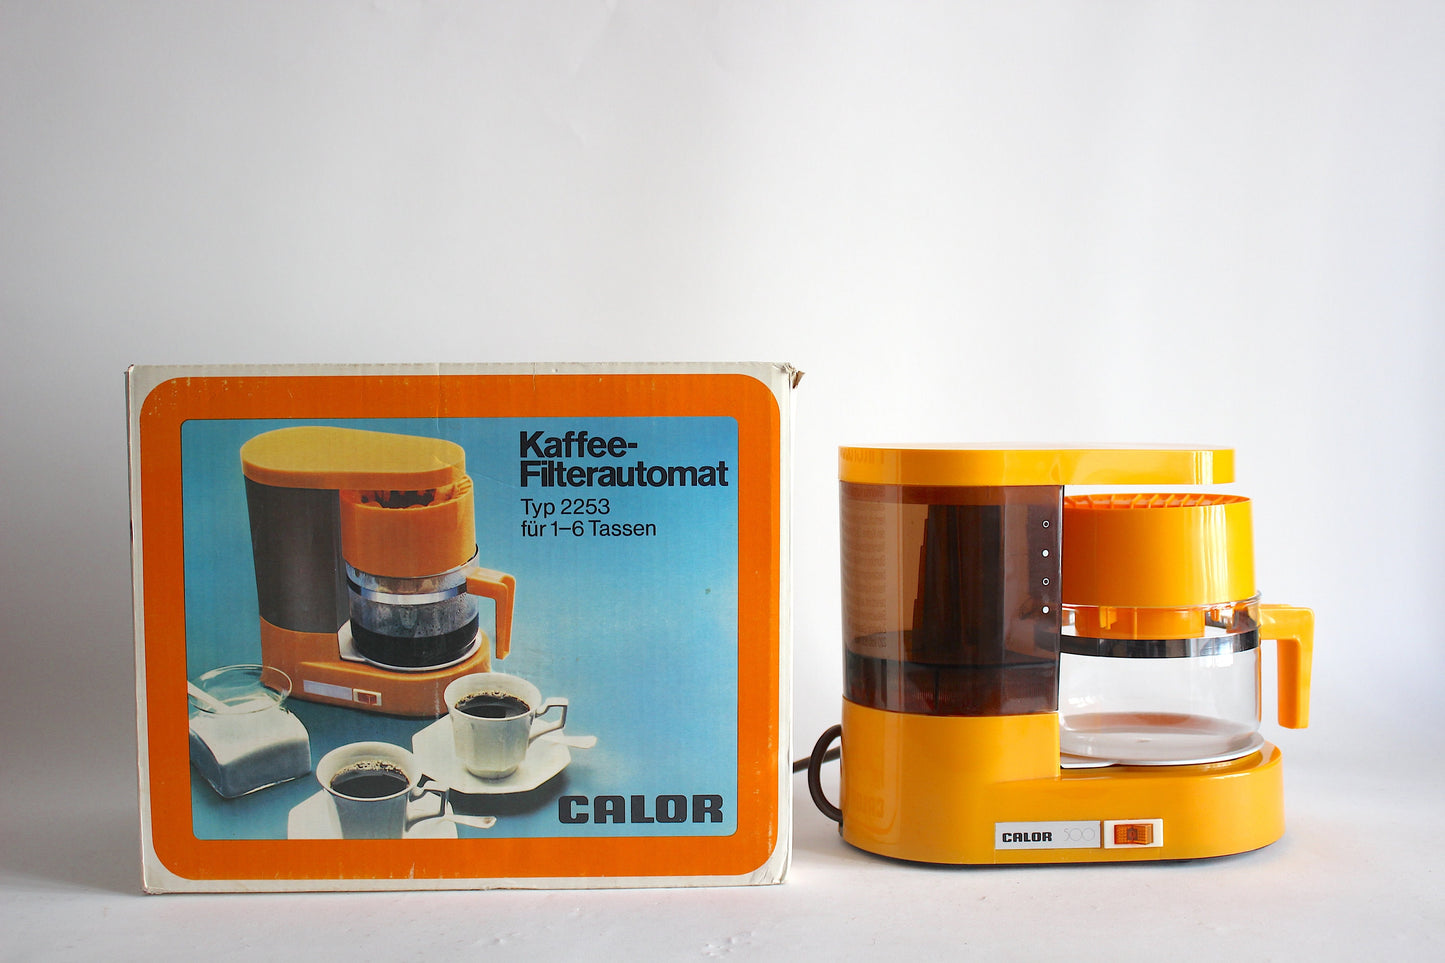 Rare 1970s Calor 2253 Coffee Maker - Vintage French Elegance in Orange